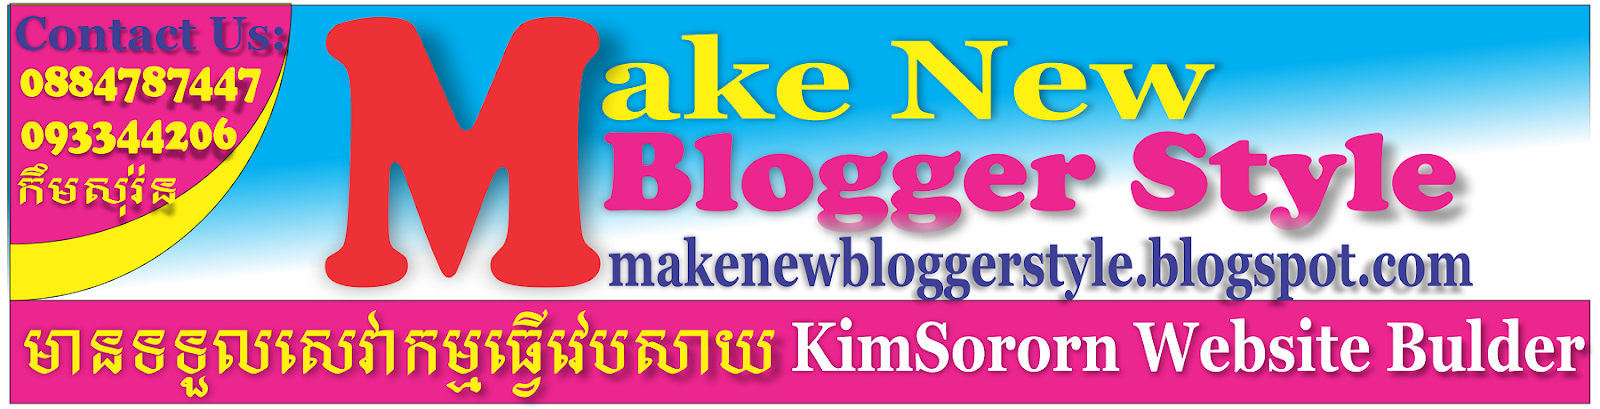 Make New Blogger Style